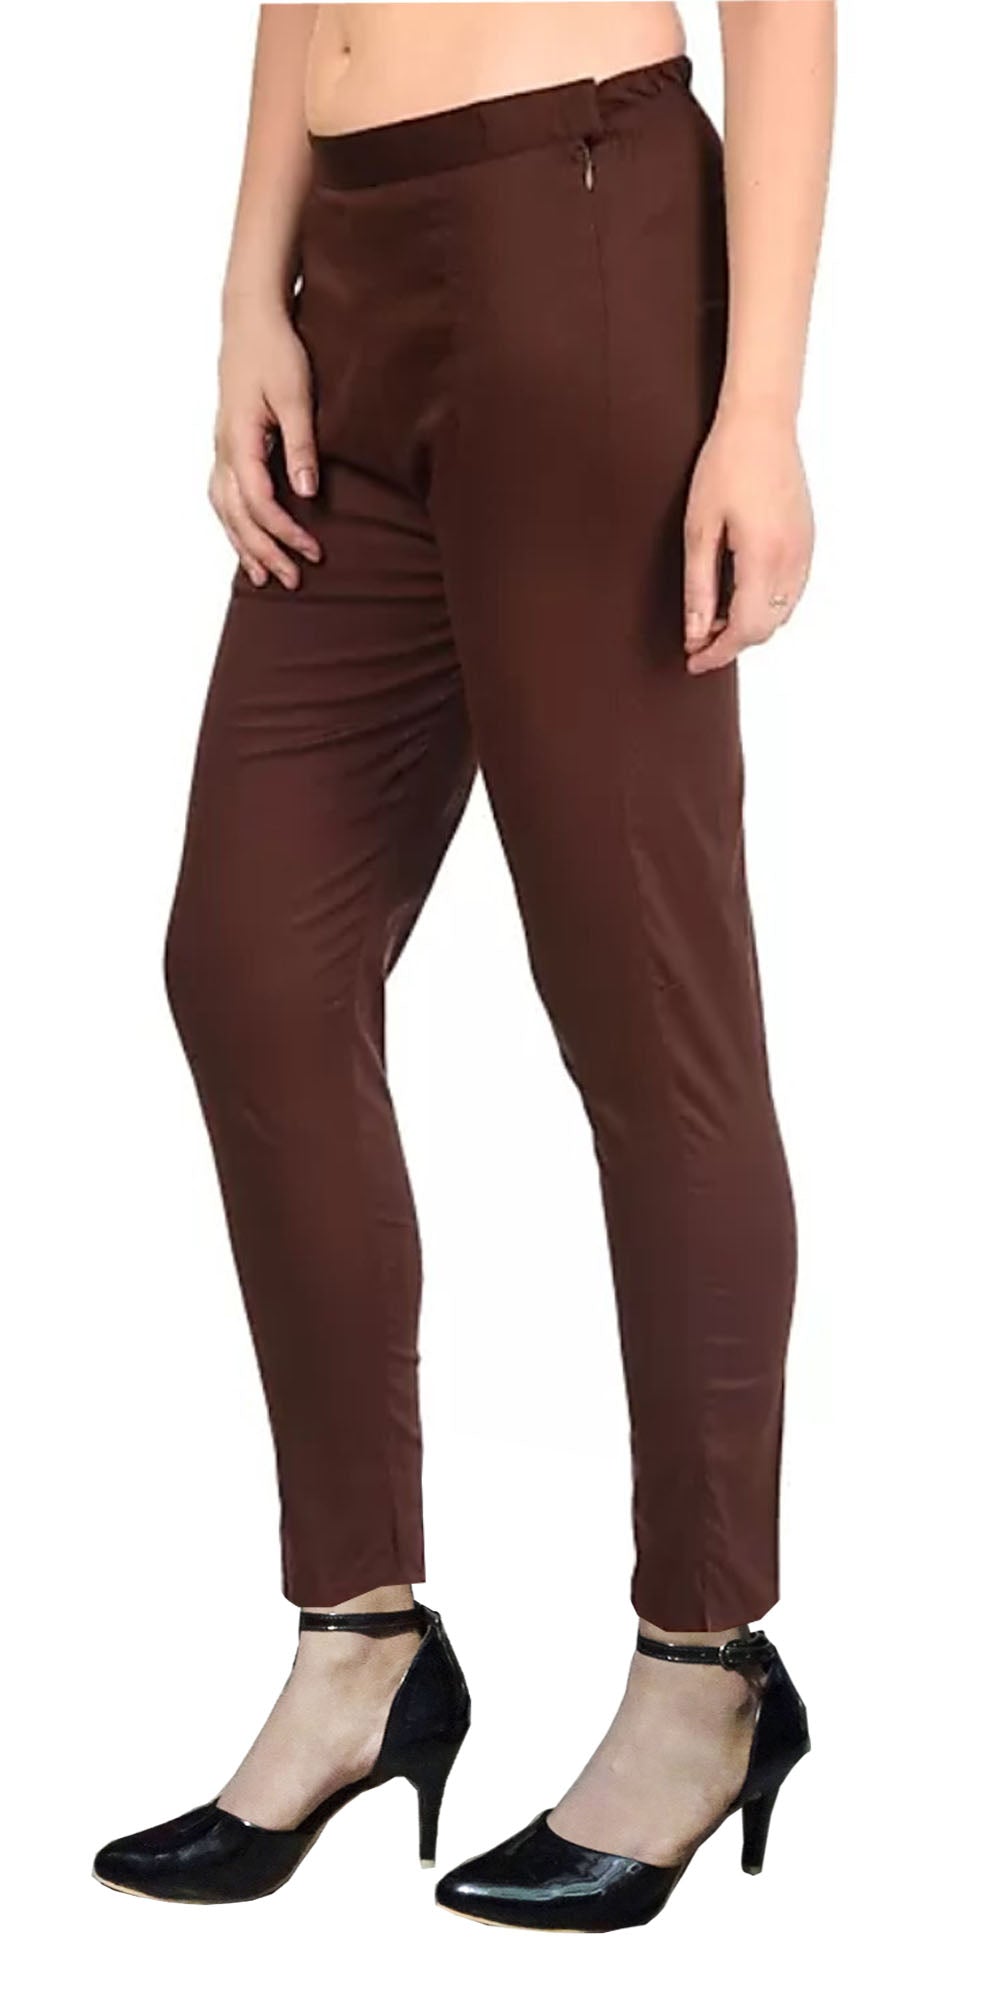 Legging Cotton Lycra Yoga Pants Solid Fabric Stretchable Designer Women's  Wear (Medium, Green 2) at Amazon Women's Clothing store